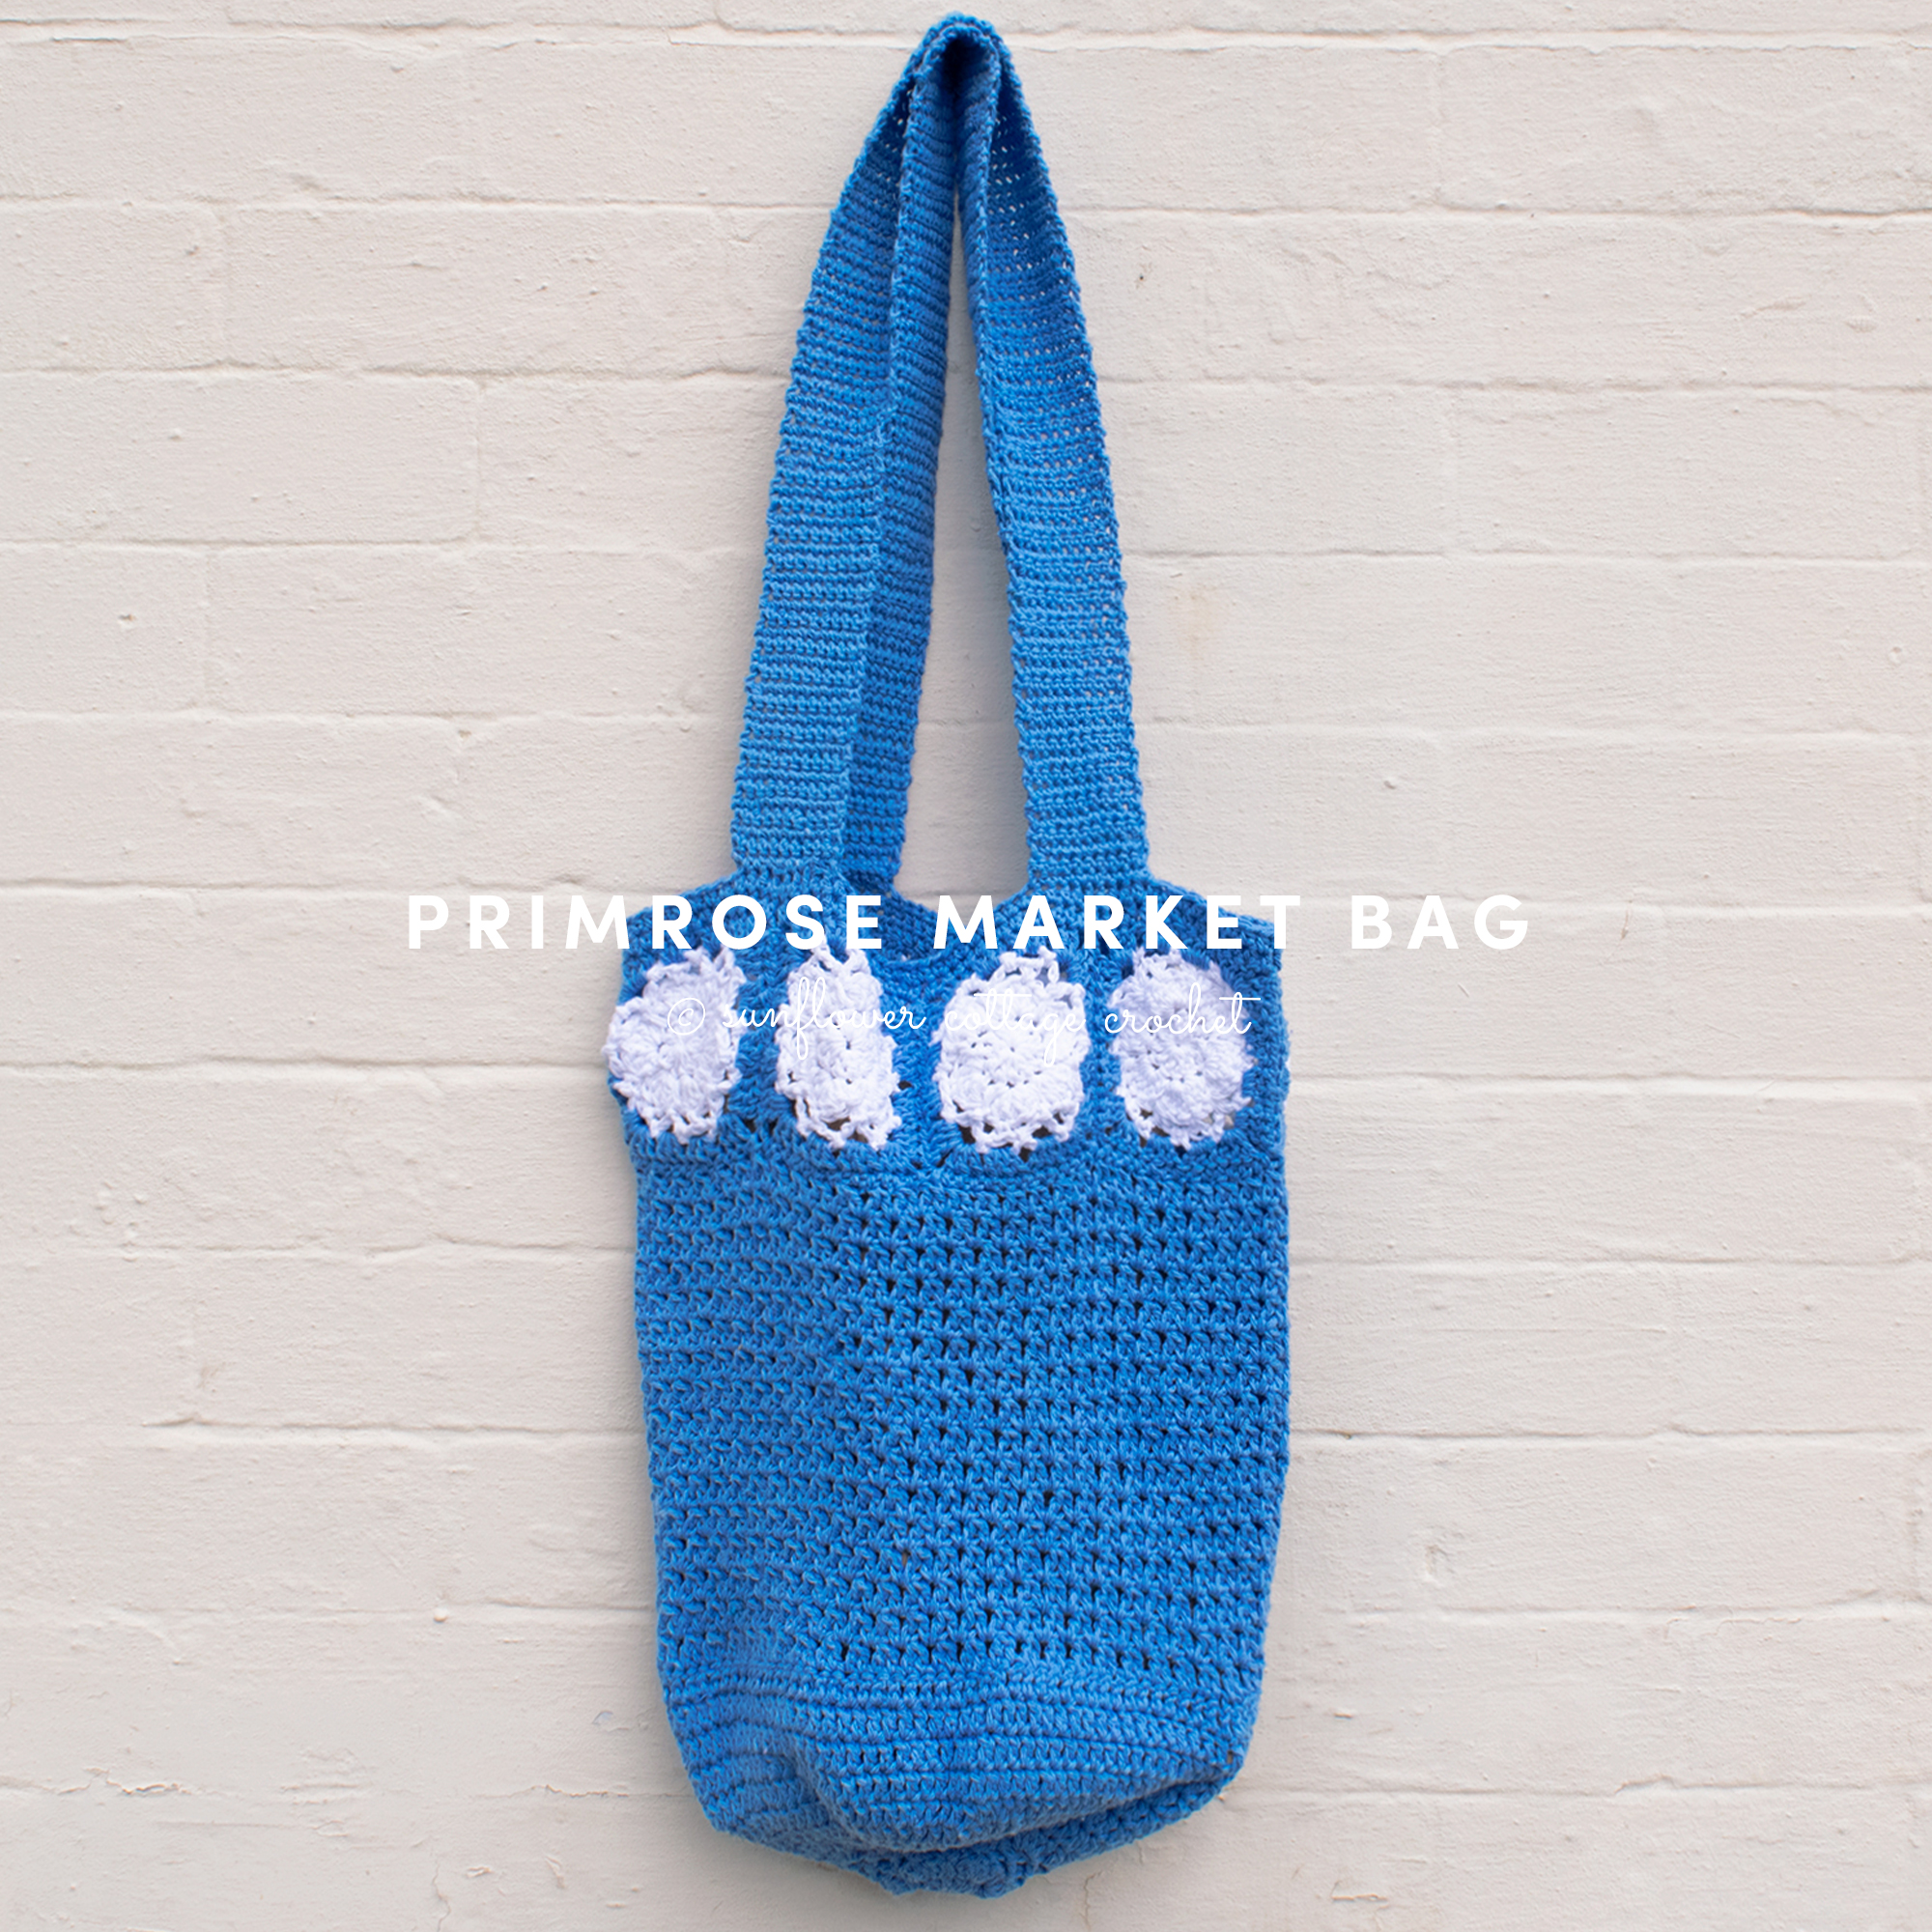 Primrose Crochet Market Bag Pattern